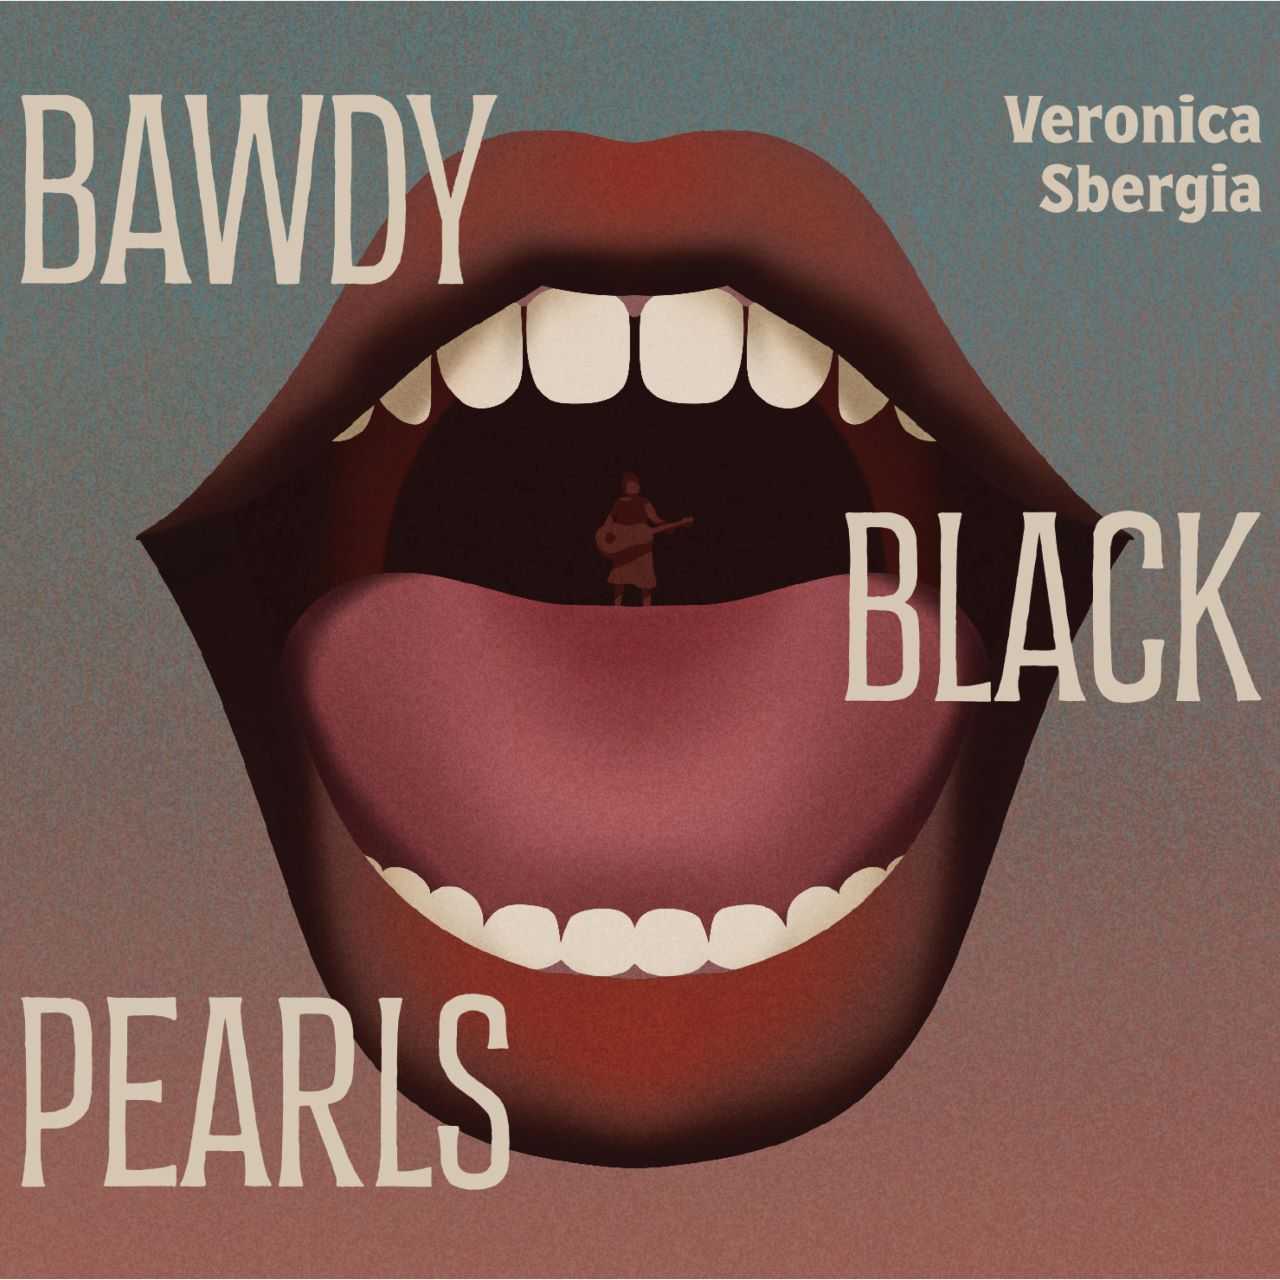 Veronica Sbergia - Bawdy Black Pearls cover album